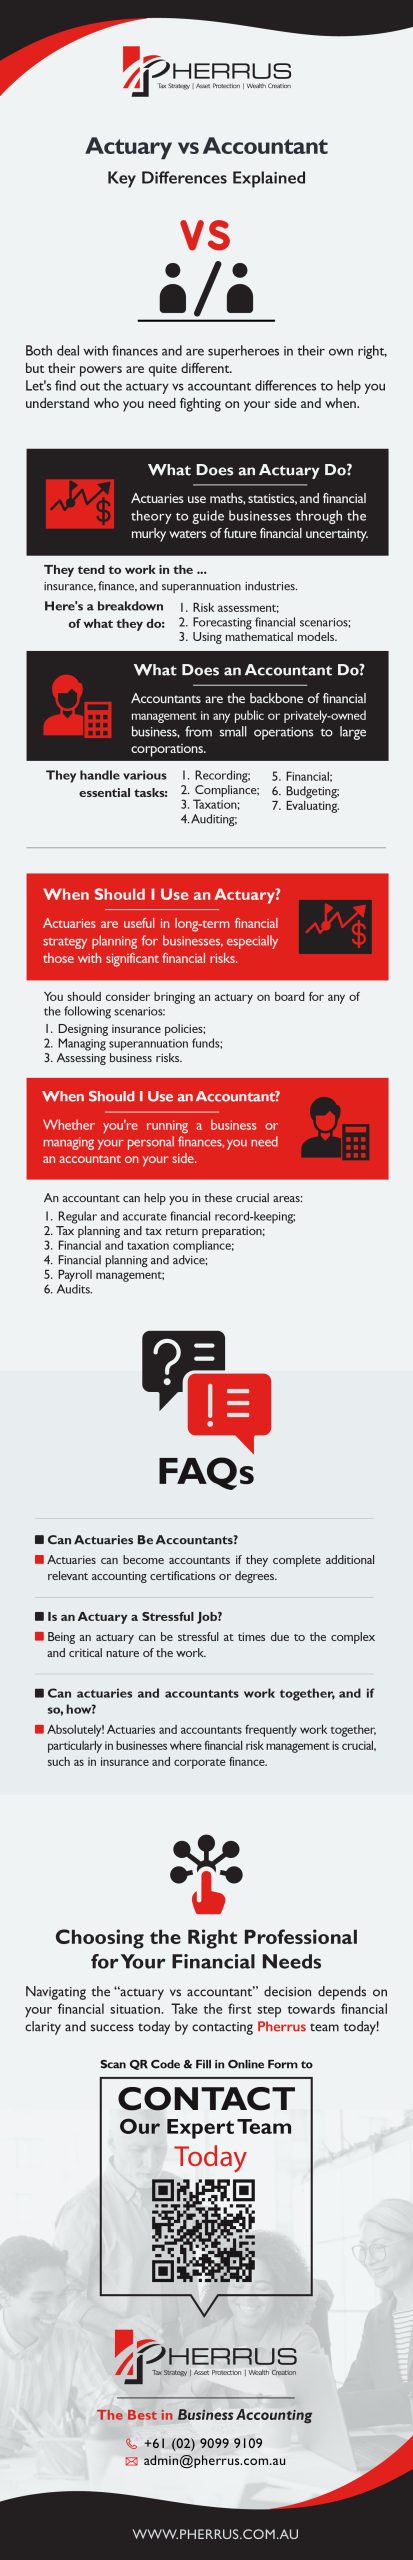 Summary_Actuary vs Accountant - Infographic